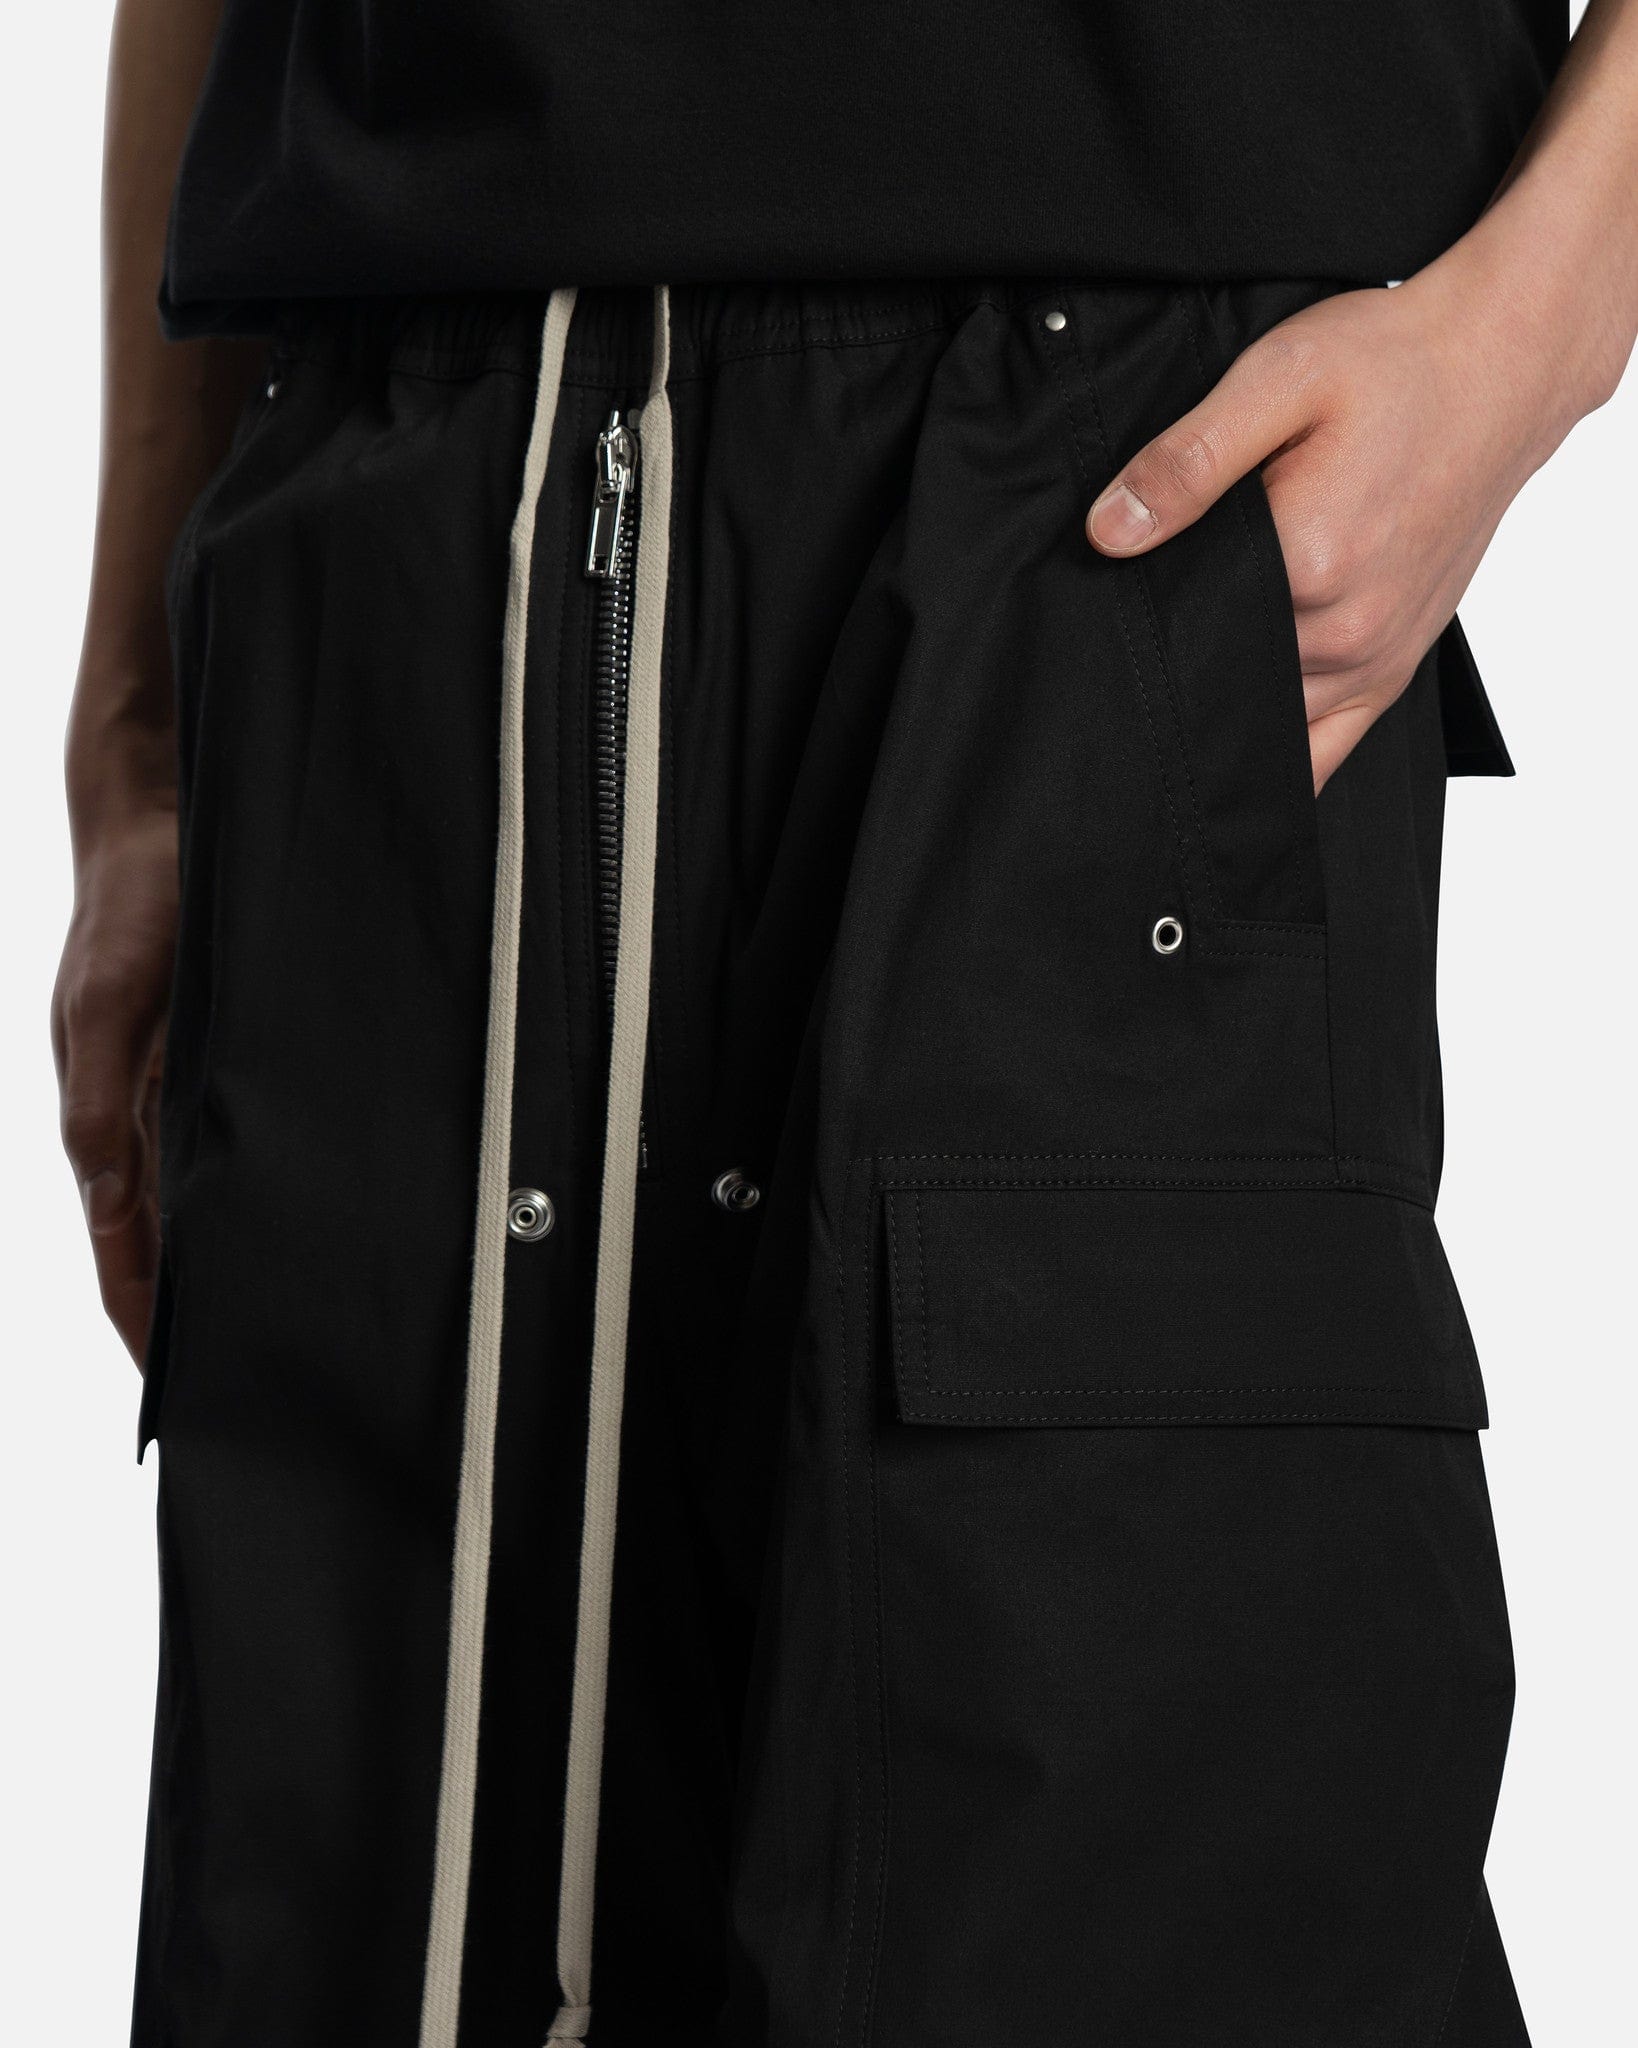 Rick Owens Men's Pants Cargobelas in Black